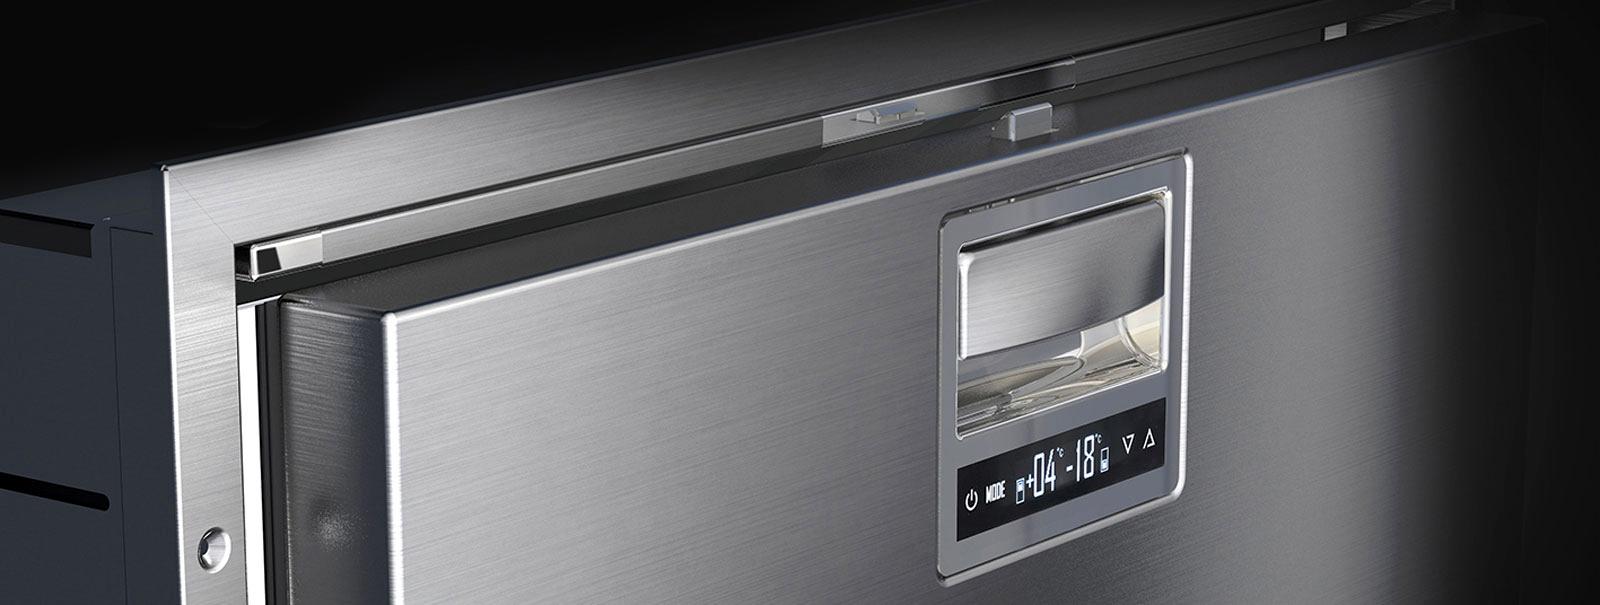 Vitrifrigo DRW180A 5.1 cu. ft. Stainless Steel Double Drawer Refrigerator/Freezer